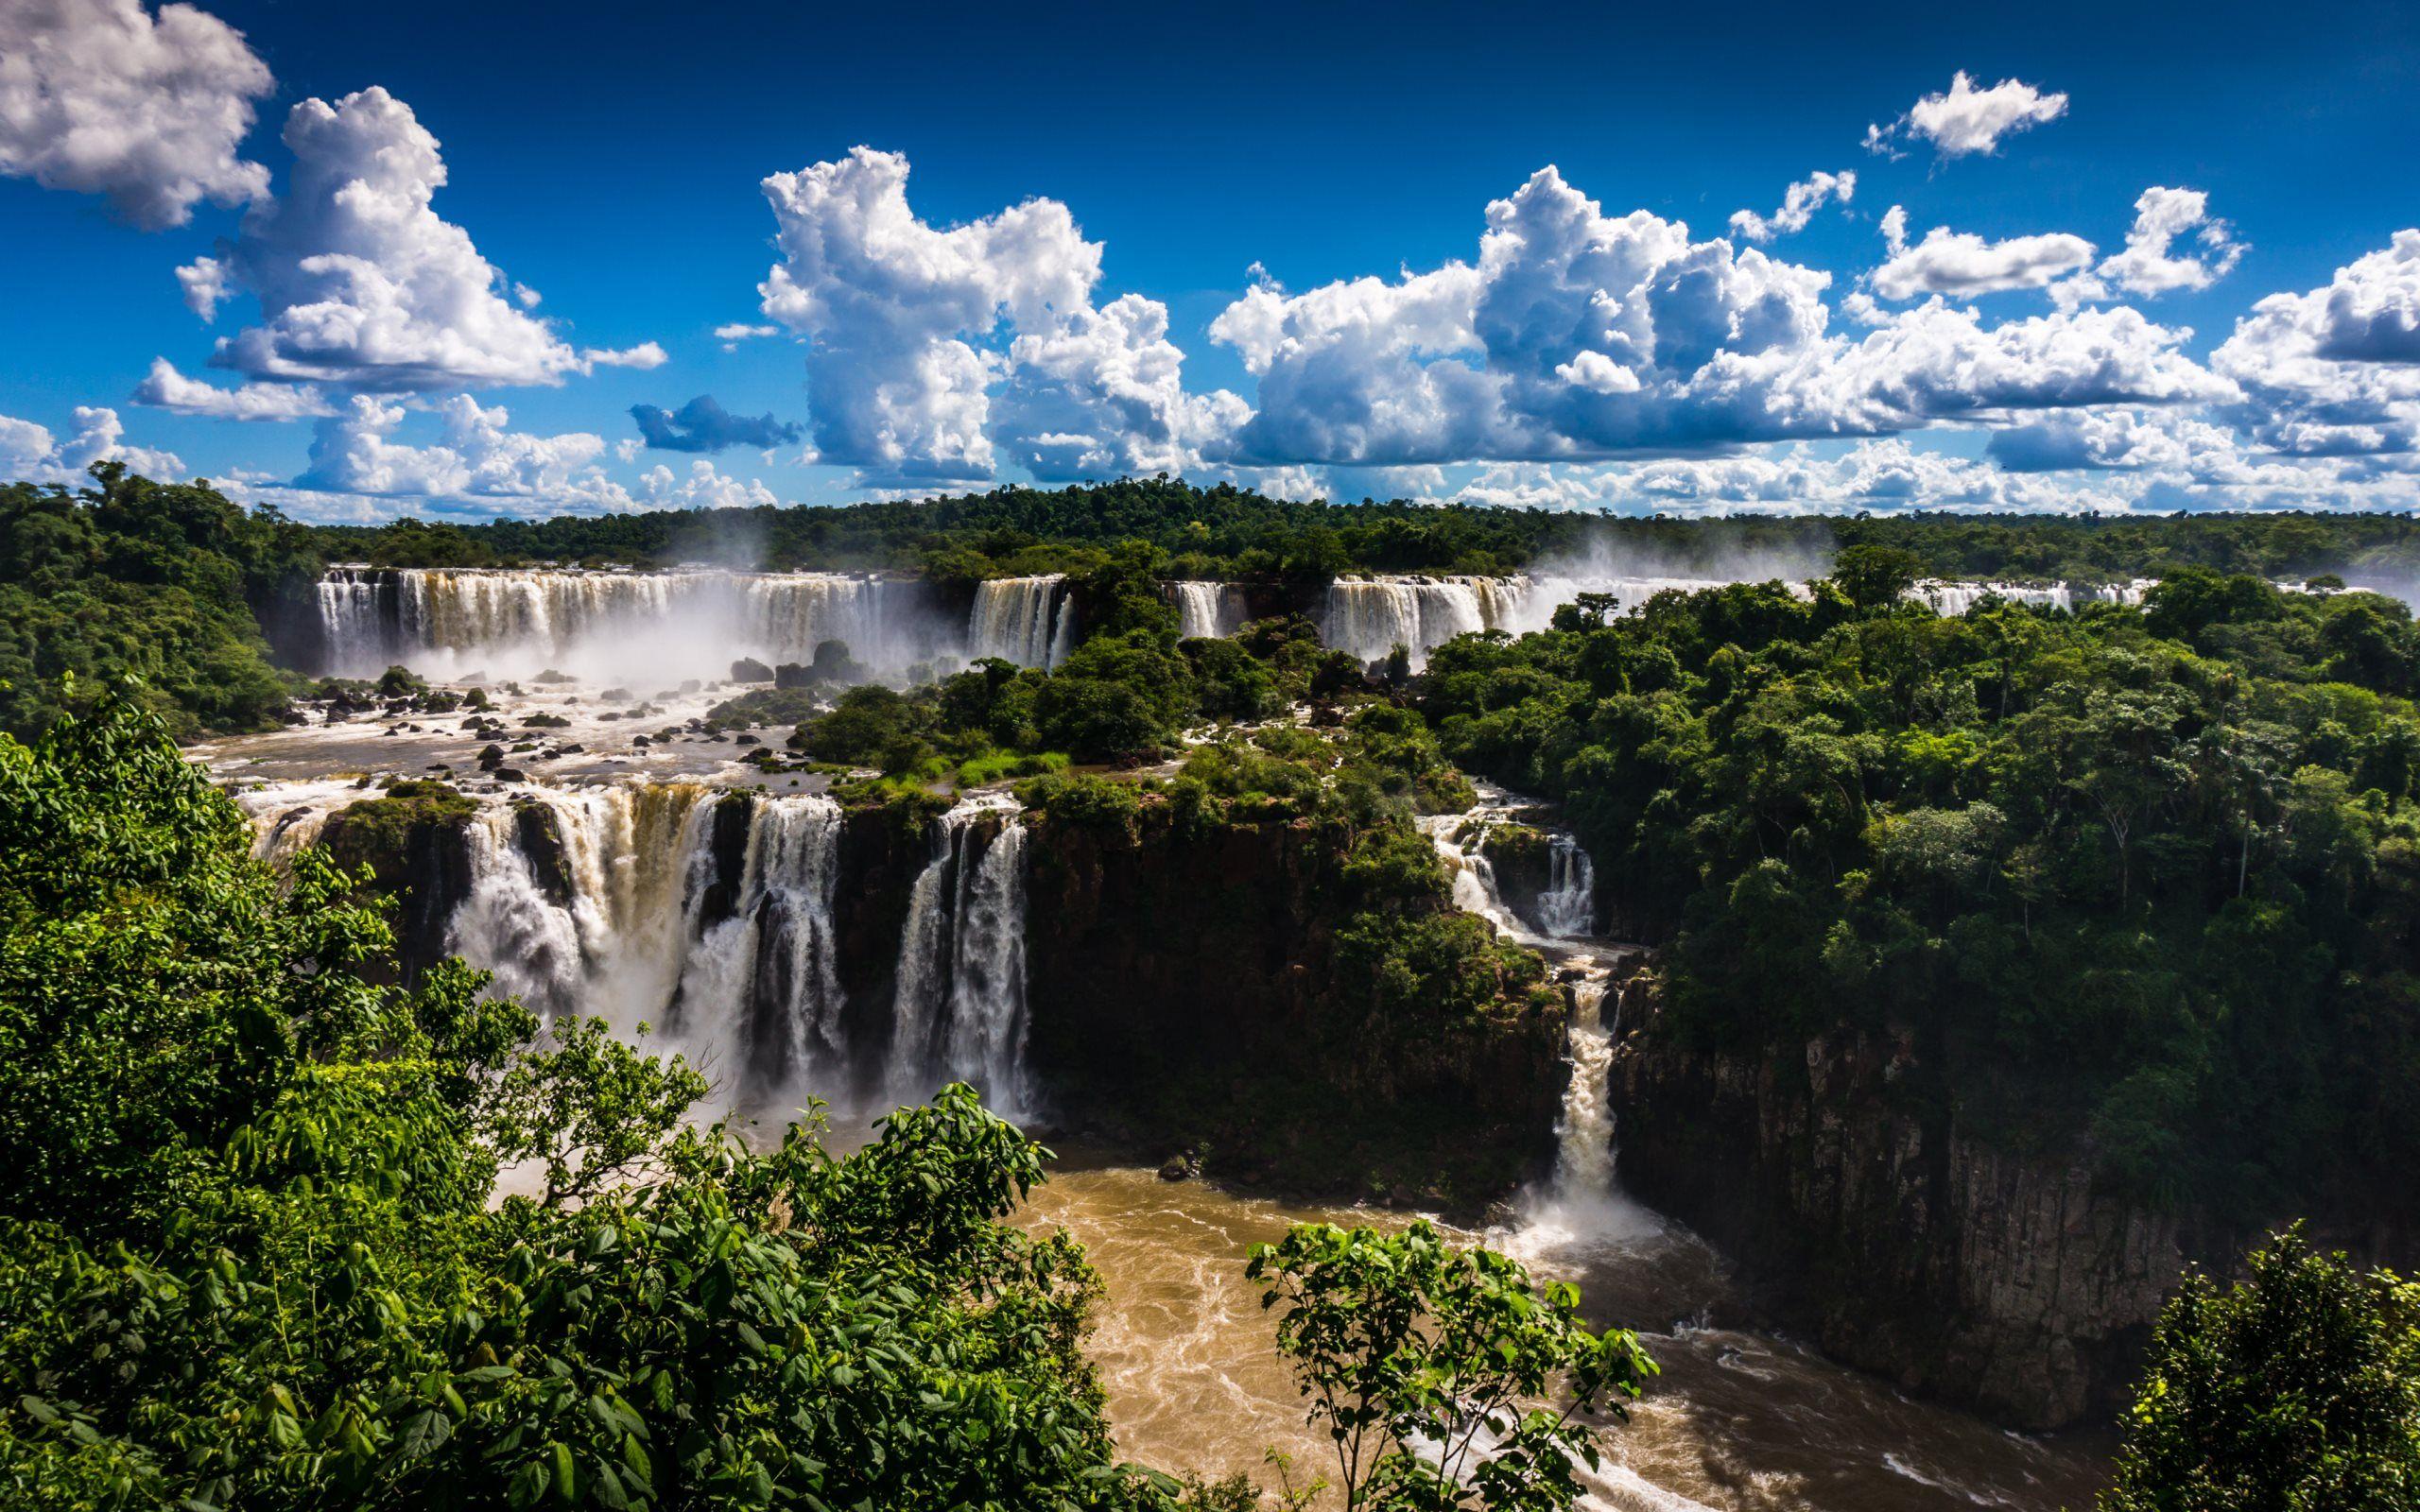 Inspire Travels. Personalized Tours of Wondrous Iguazu Falls